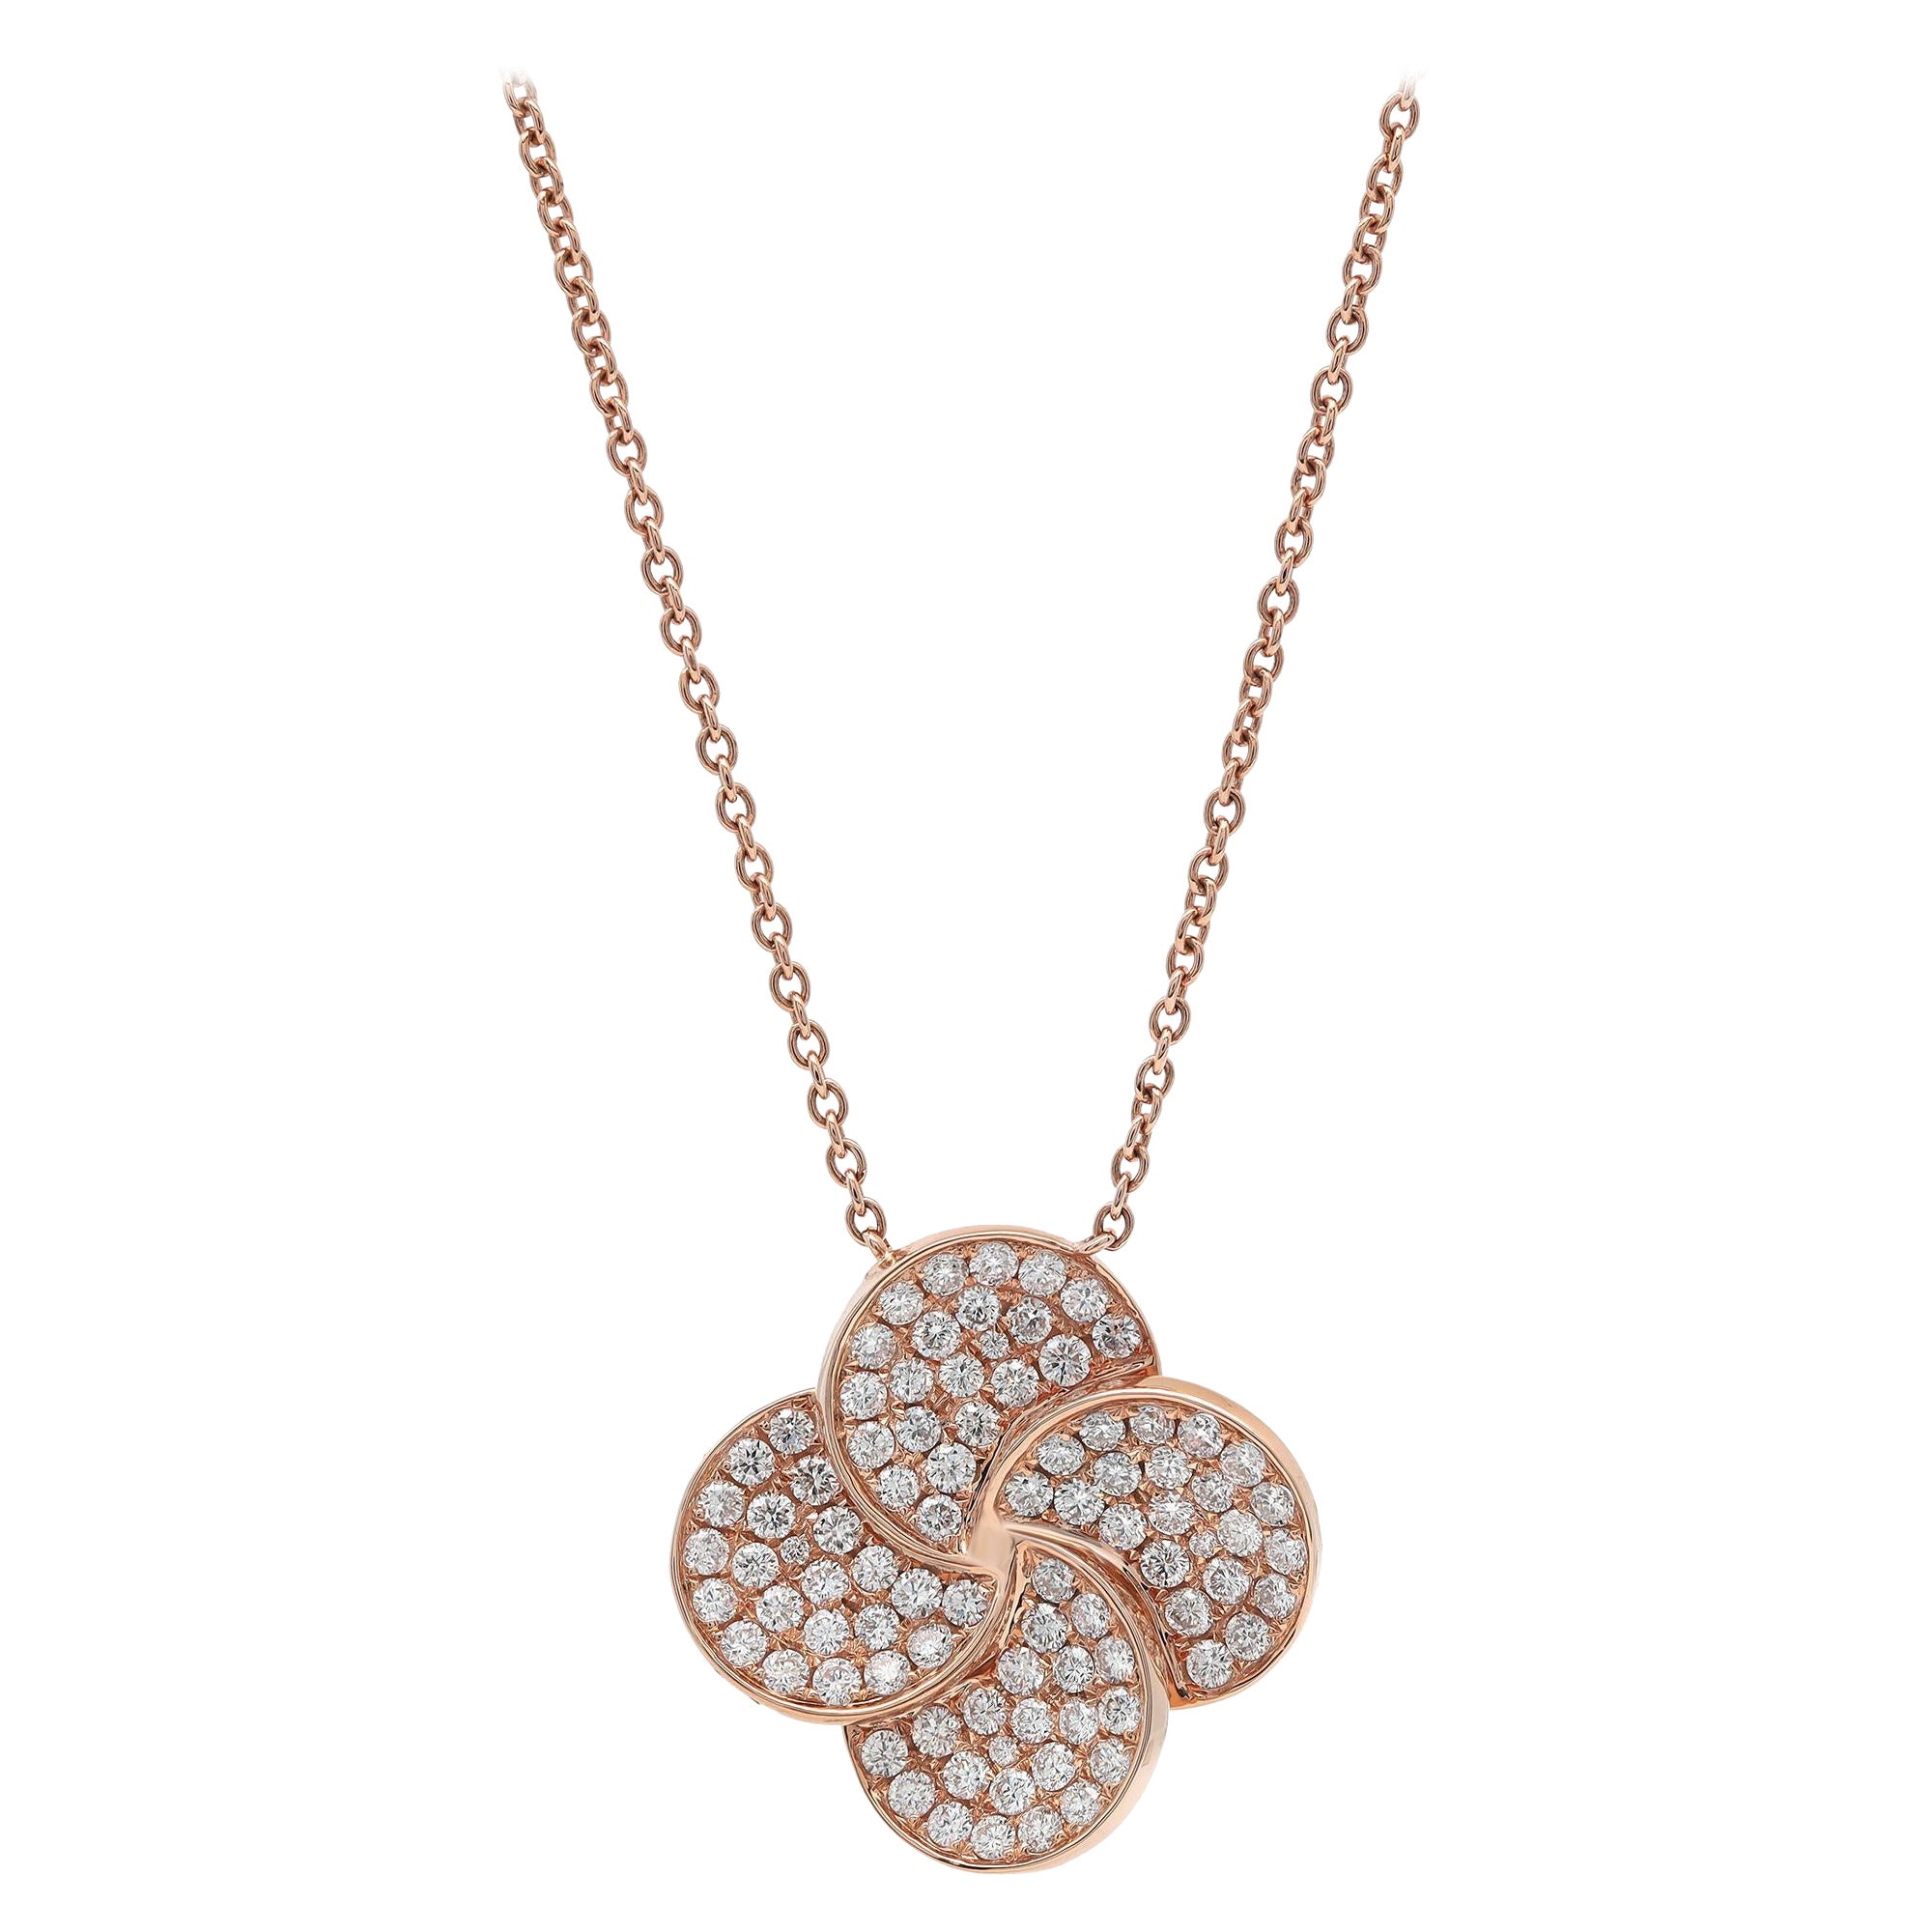 1.77Cttw Pave Set Round Cut Diamond Flower Pendant Necklace 18K Rose Gold For Sale